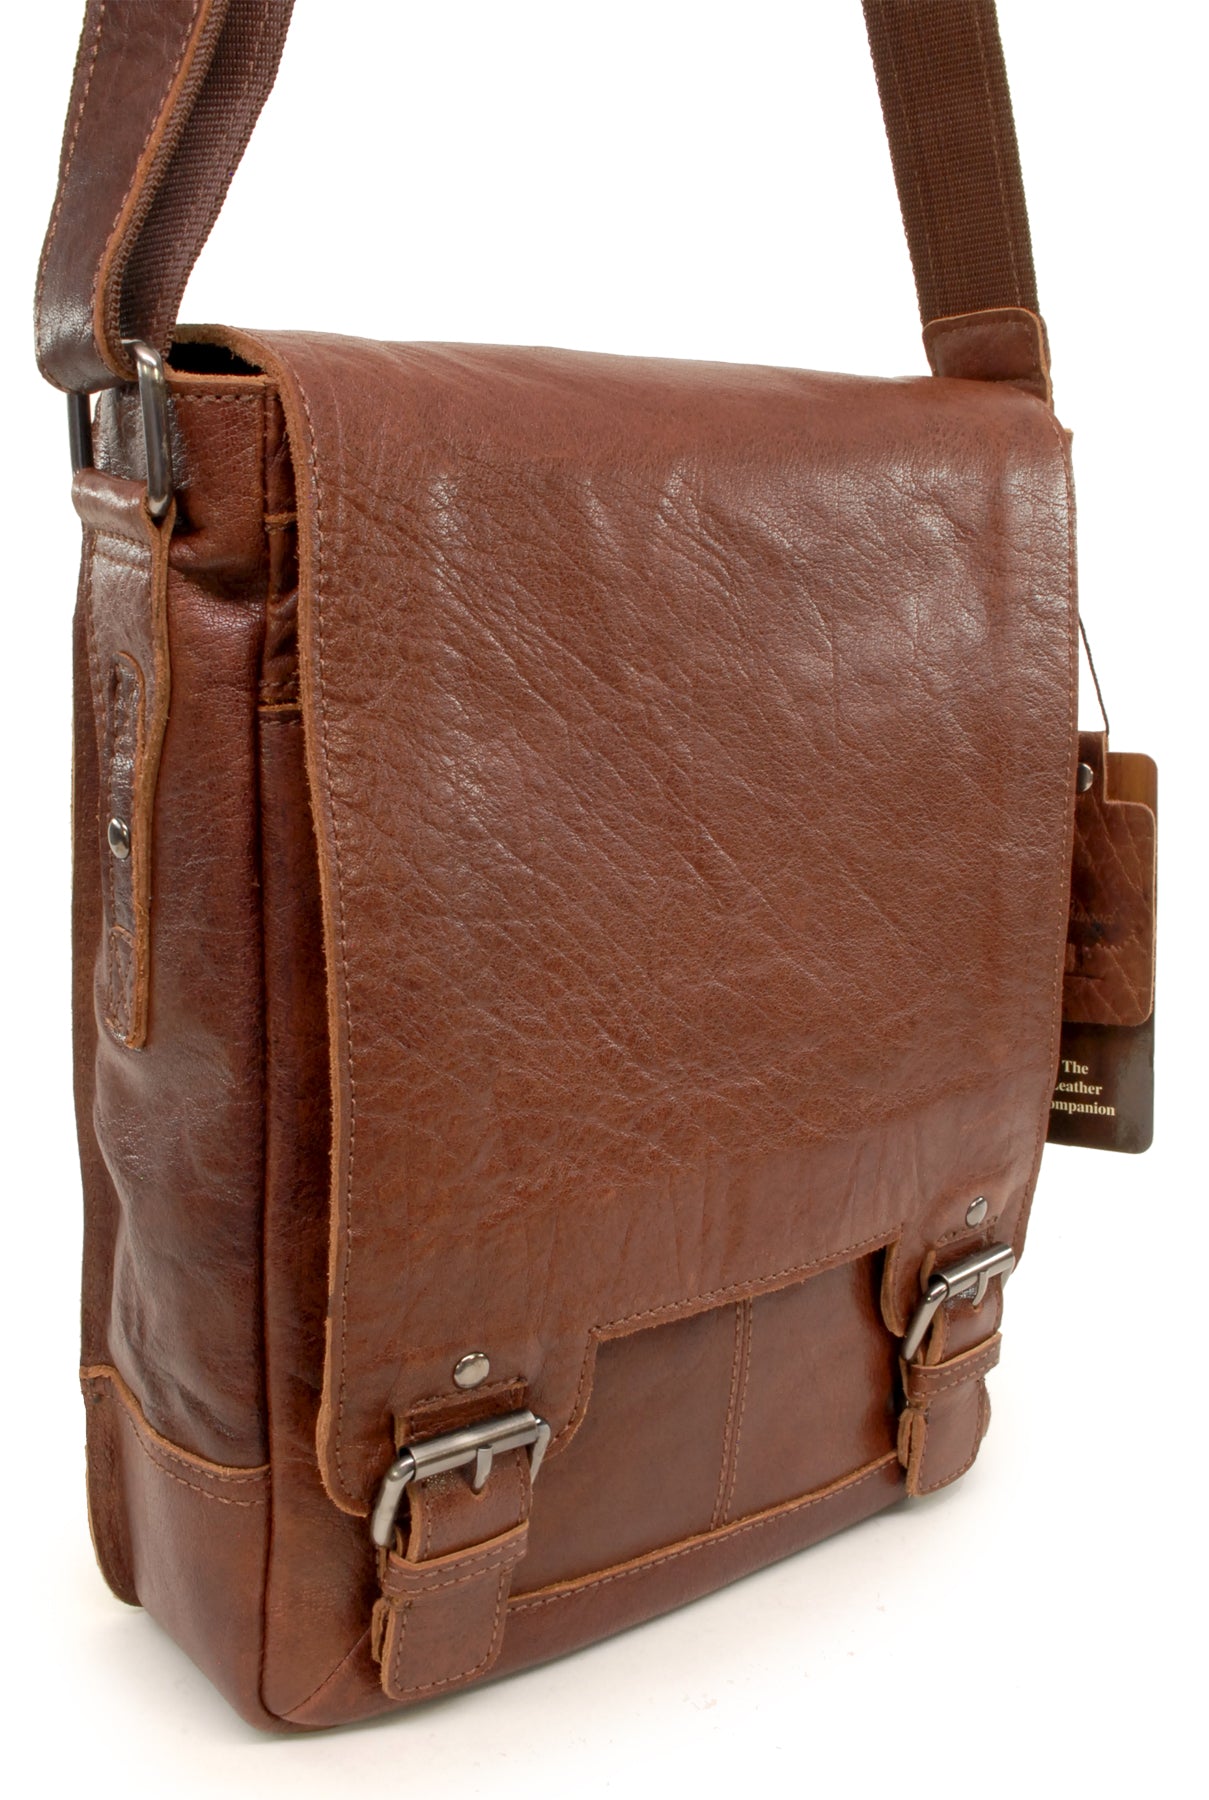 Ashwood - Messenger Bag - Laptop/iPad A4 Size - Cross Body/Shoulder/Work Bag  - Genuine Leather - 8342 - Brown : : Computers & Accessories